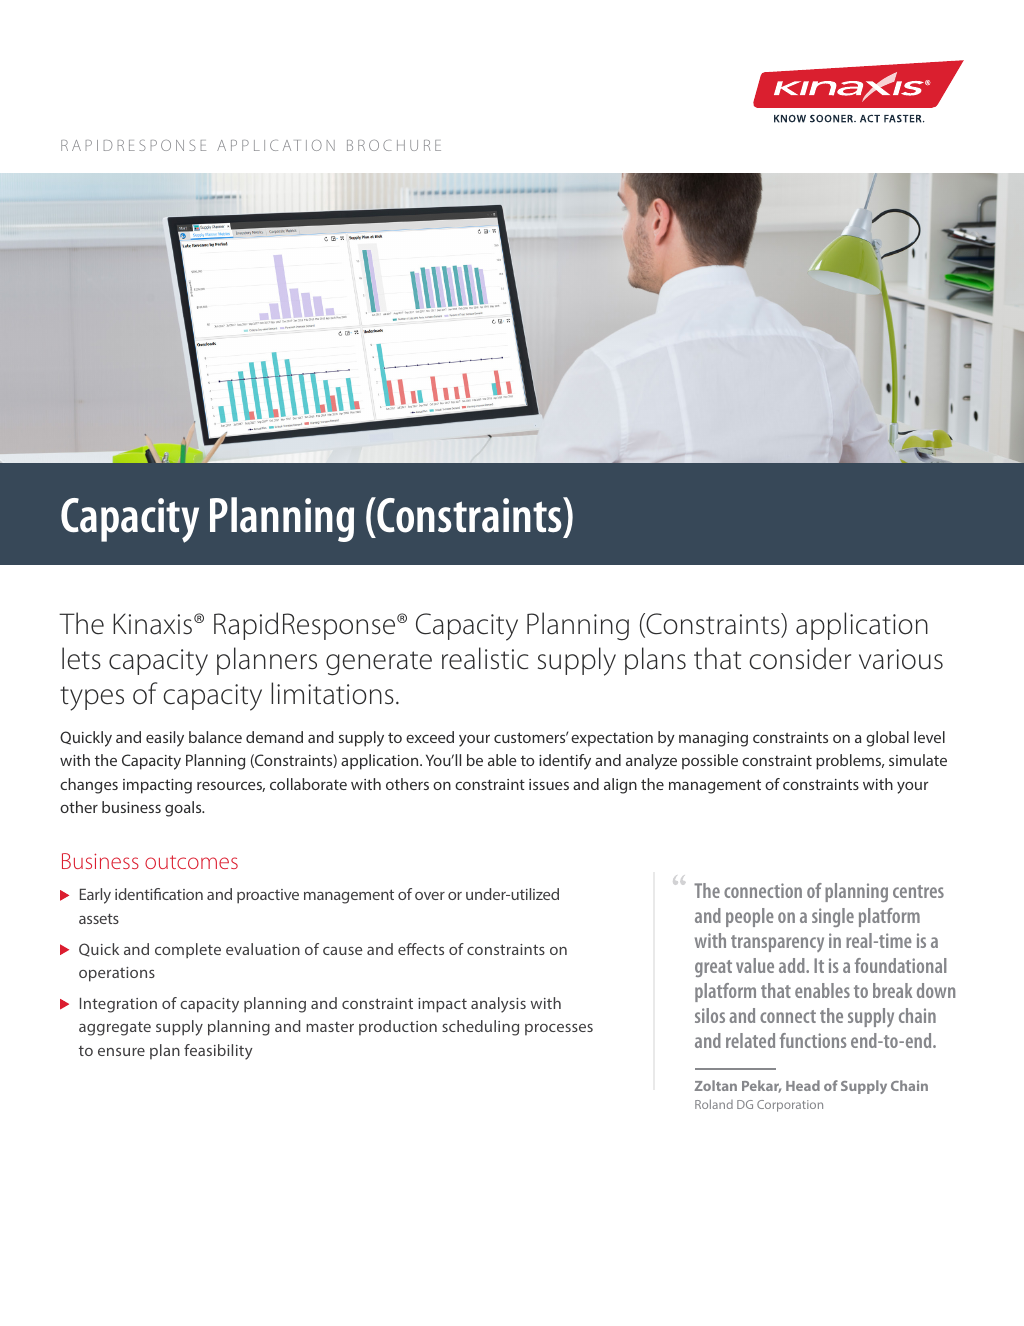 Capacity Planning Constraints Brochure